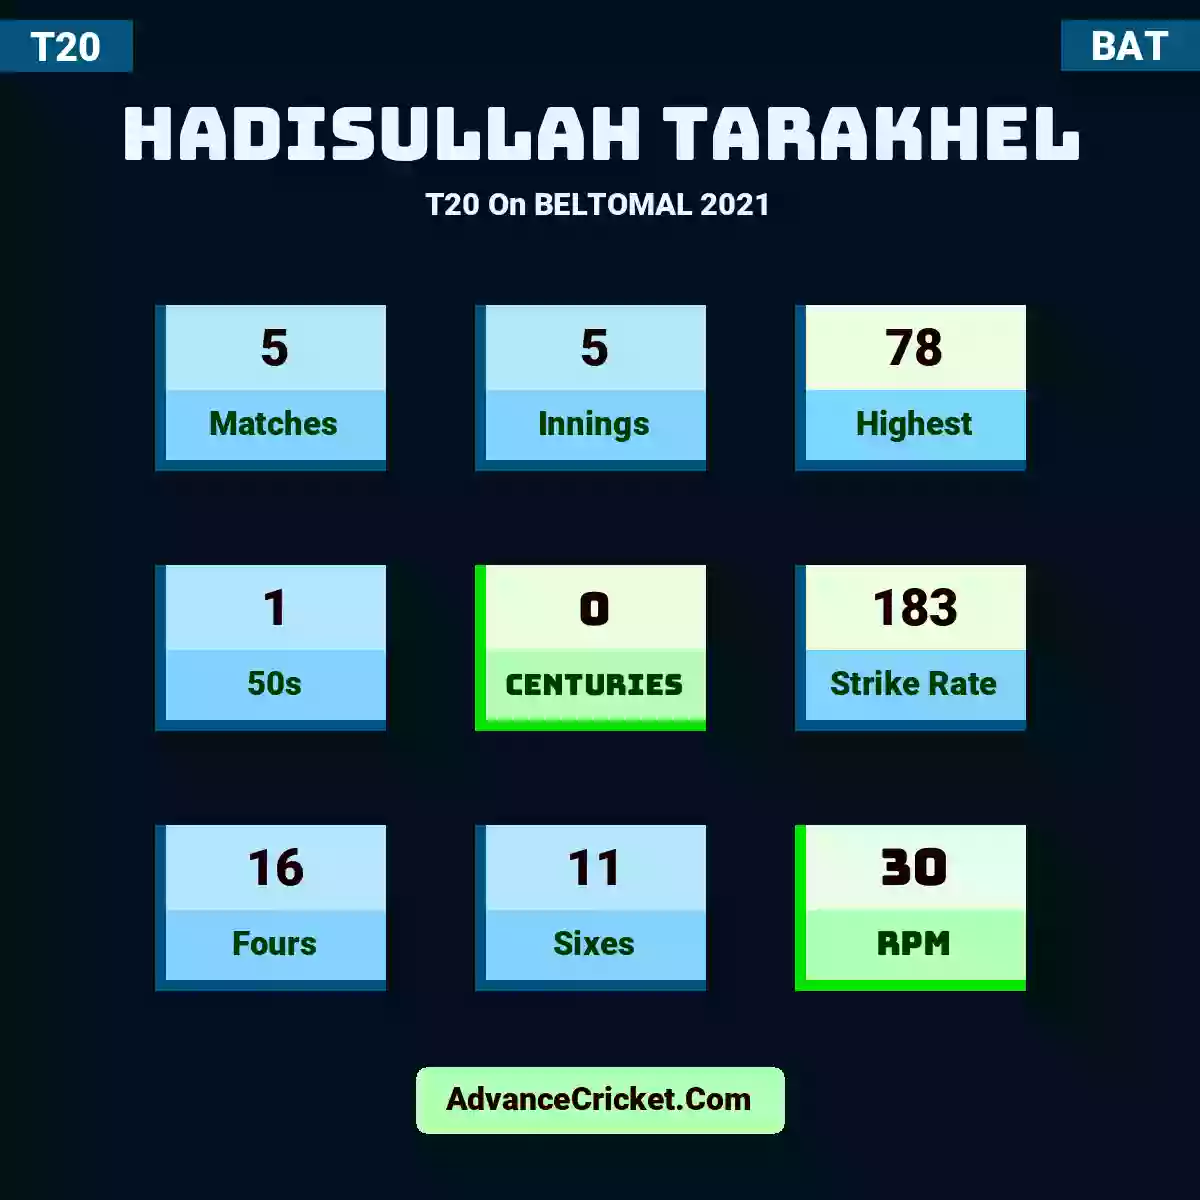 Hadisullah Tarakhel T20  On BELTOMAL 2021, Hadisullah Tarakhel played 5 matches, scored 78 runs as highest, 1 half-centuries, and 0 centuries, with a strike rate of 183. H.Tarakhel hit 16 fours and 11 sixes, with an RPM of 30.